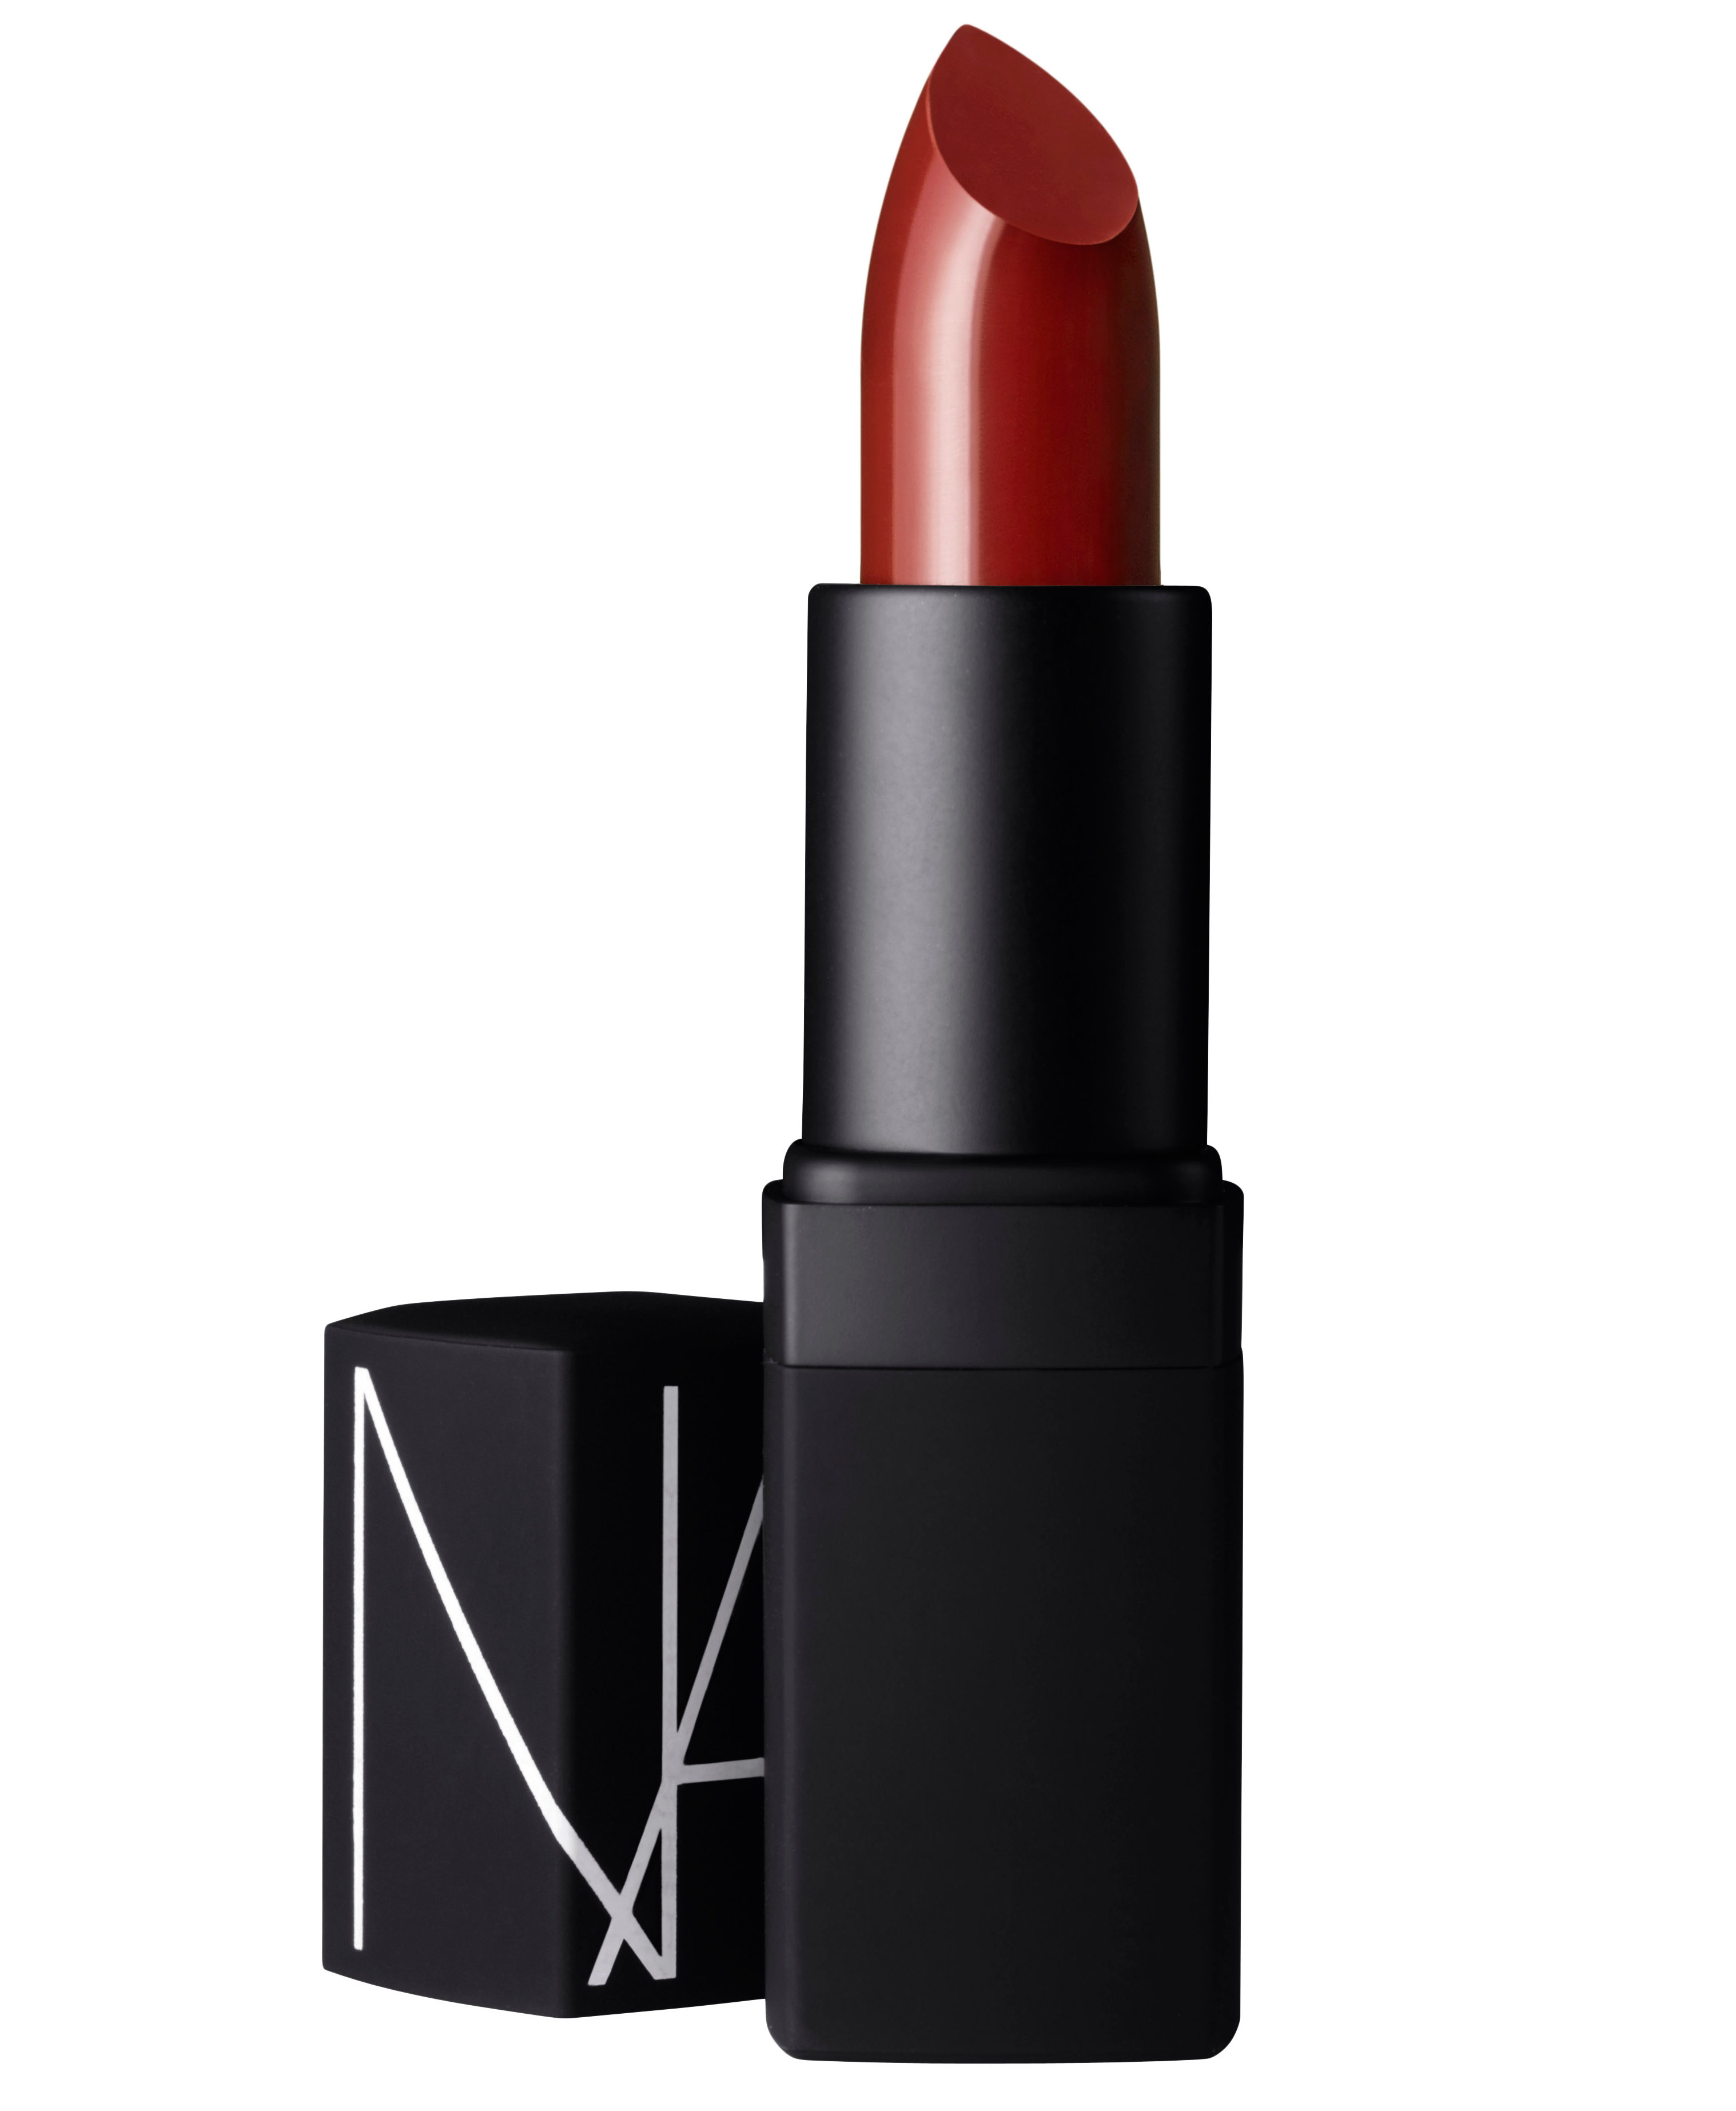 NARS Fall 2015 Color Collection - VIP Lipstick